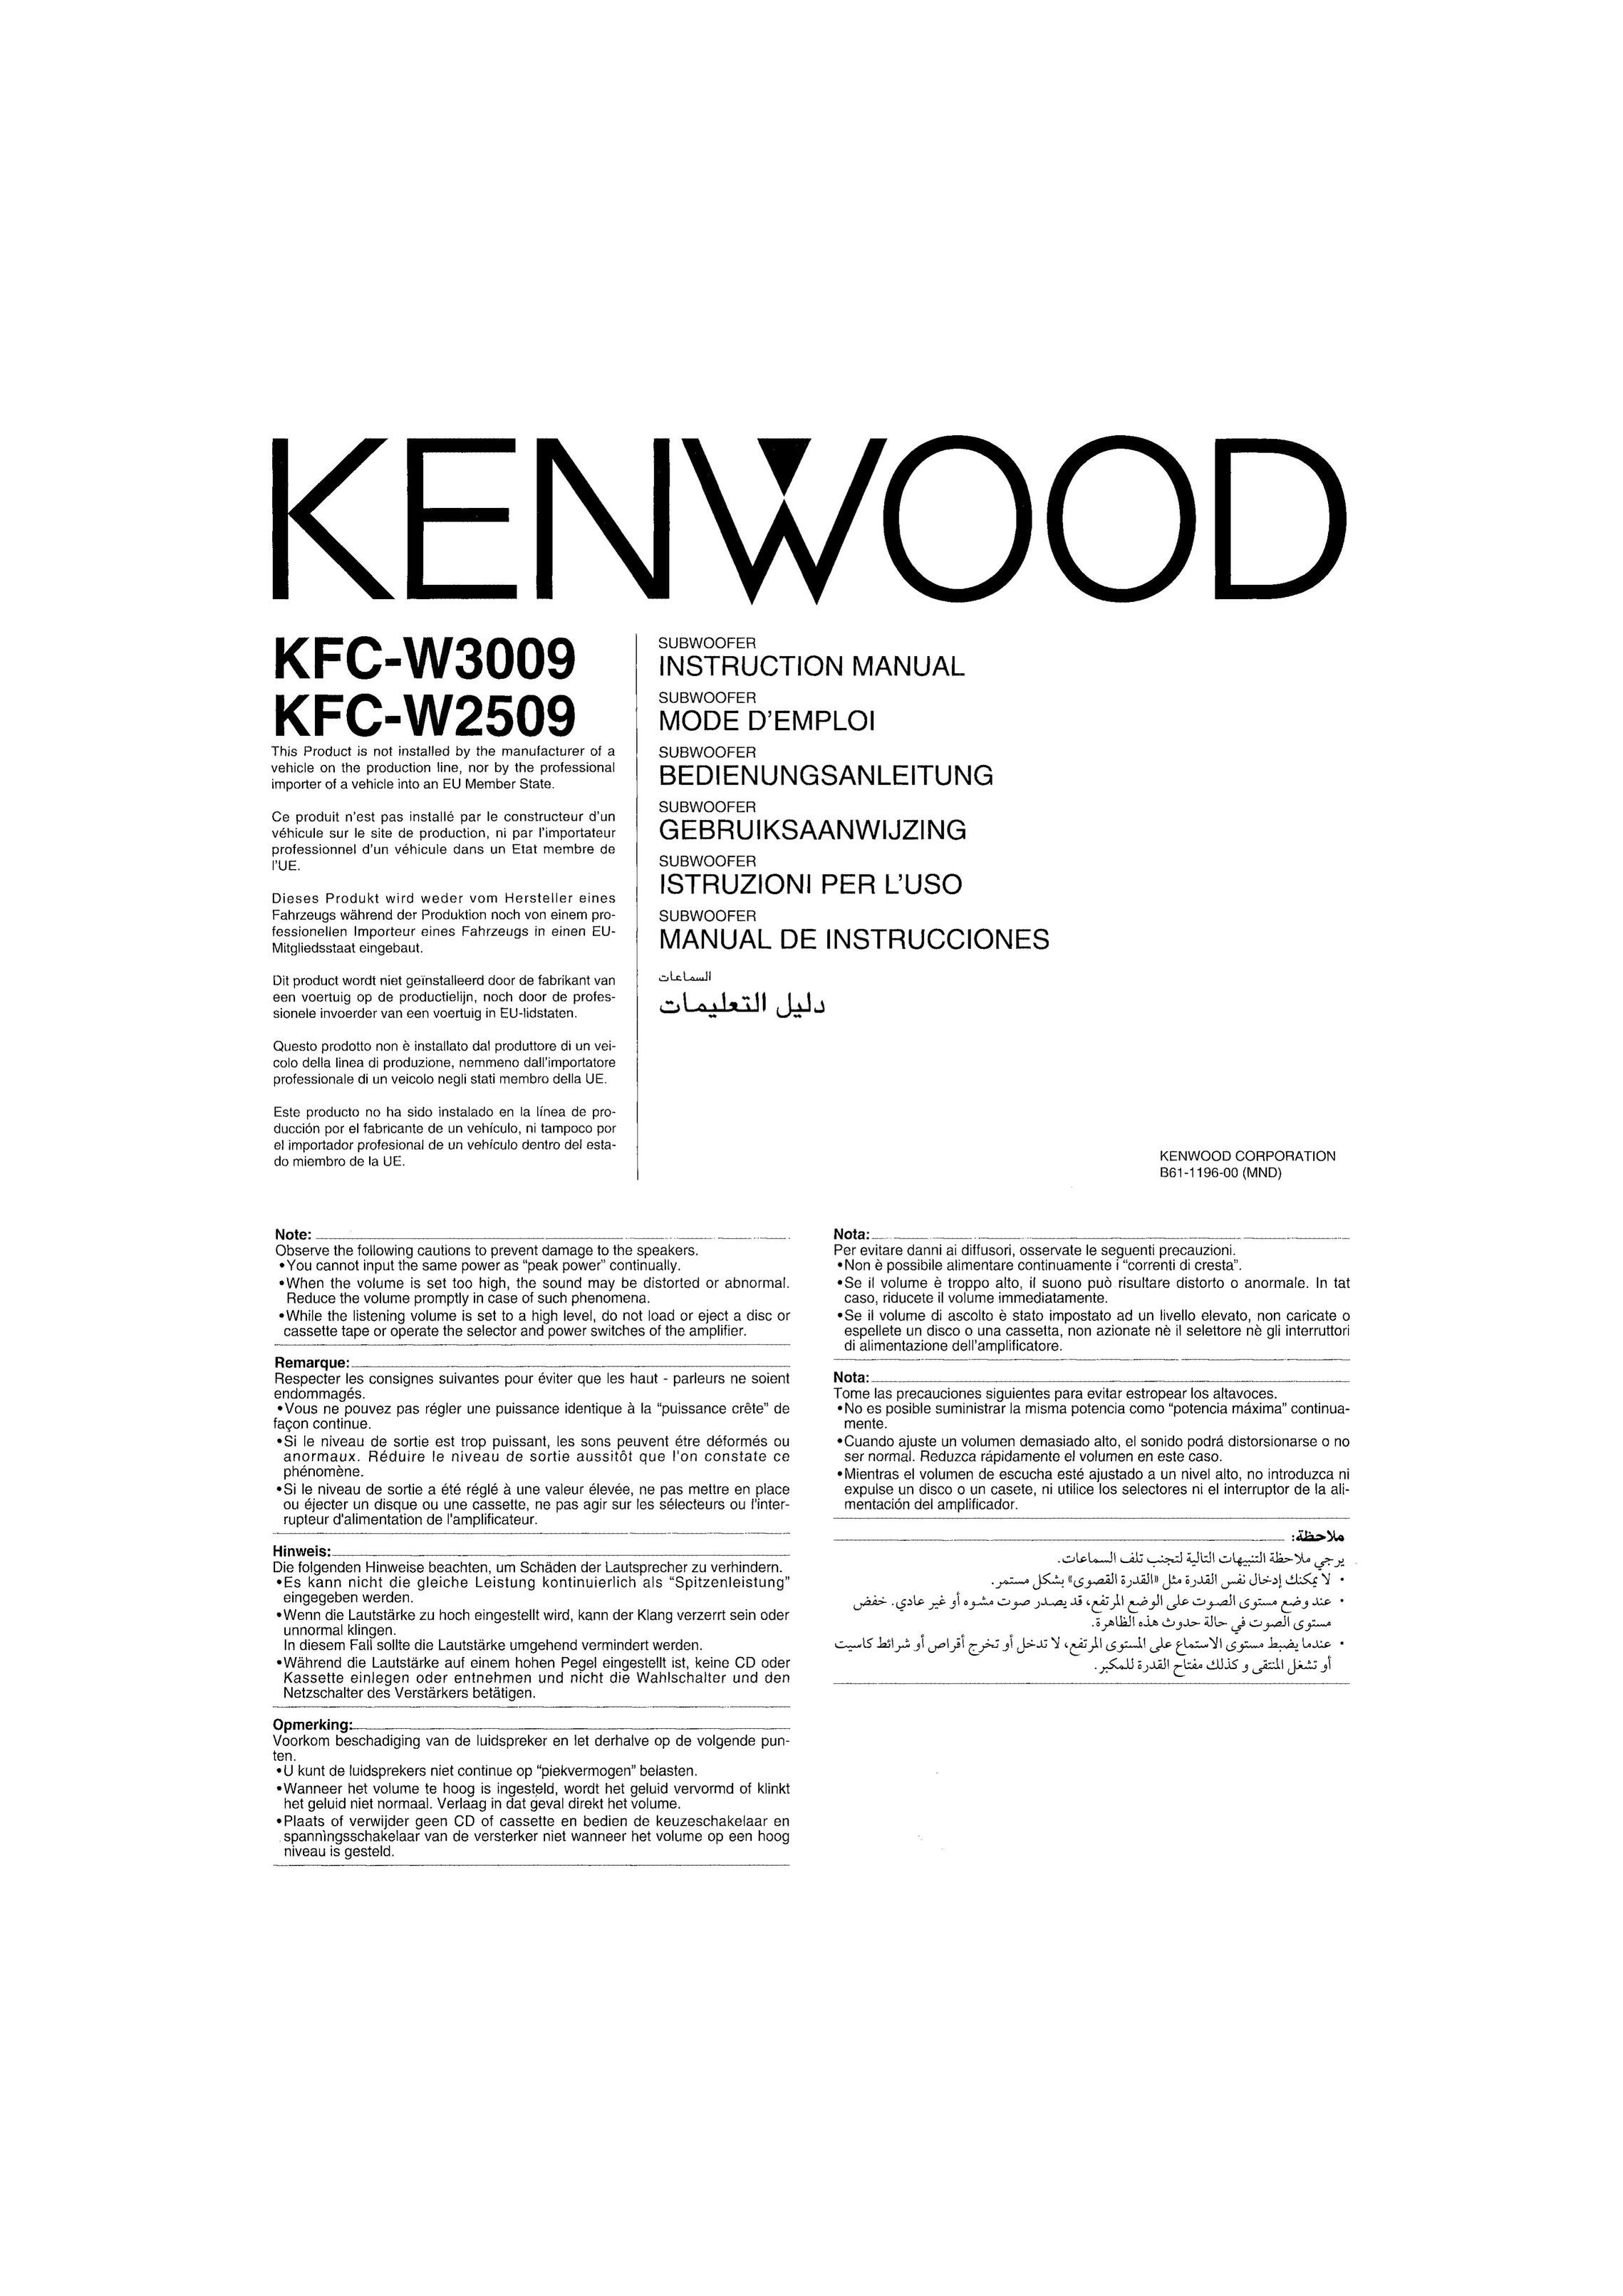 Kenwood KFC-W3009 Speaker User Manual